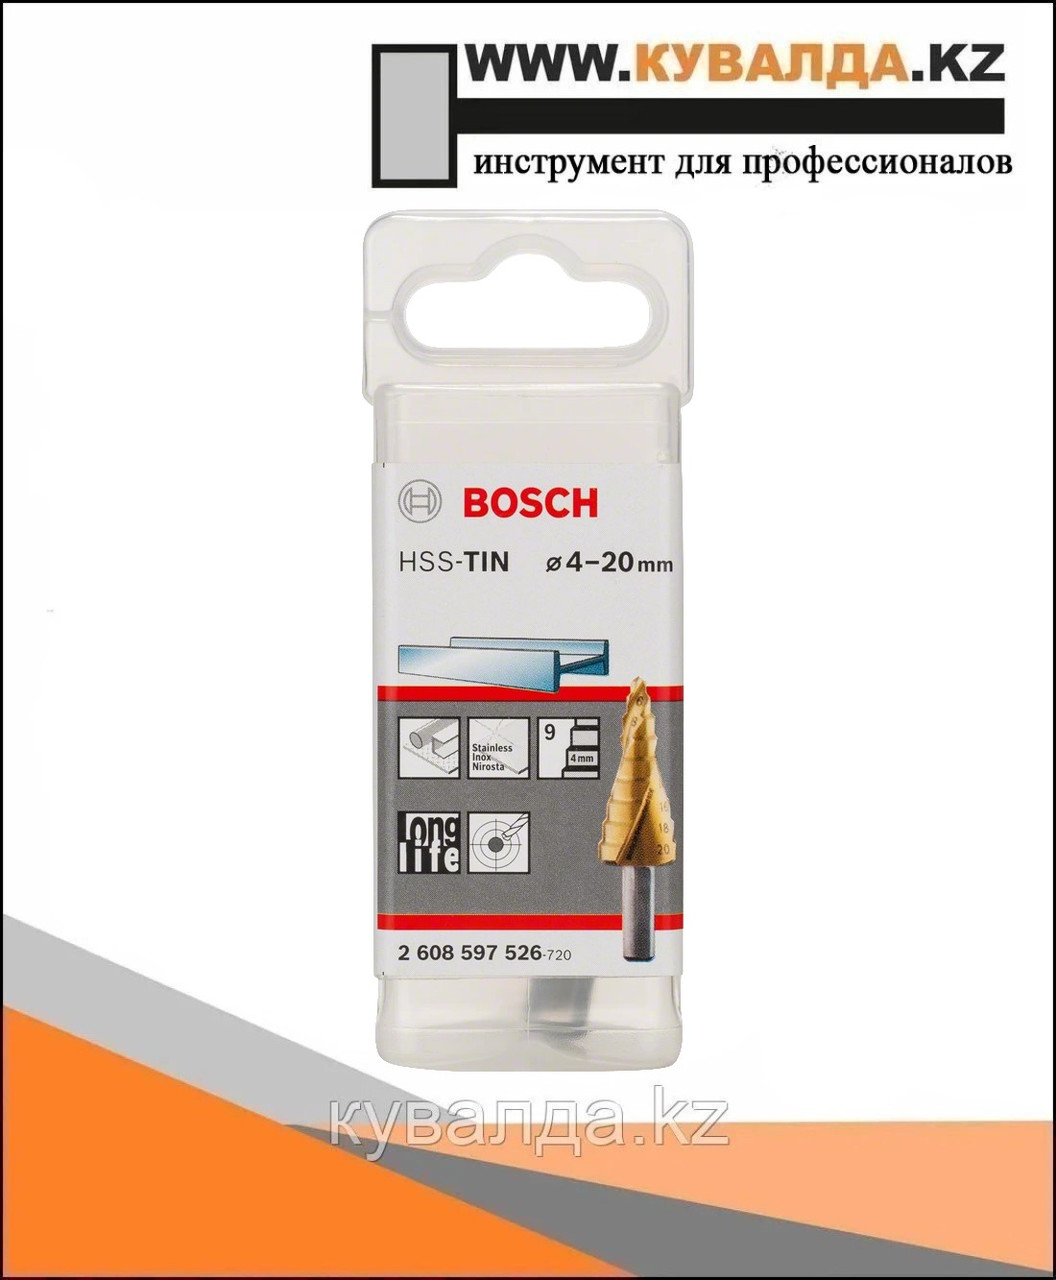 Bosch Ступ сверло HSS-TIN 9 ступ 4-20 мм